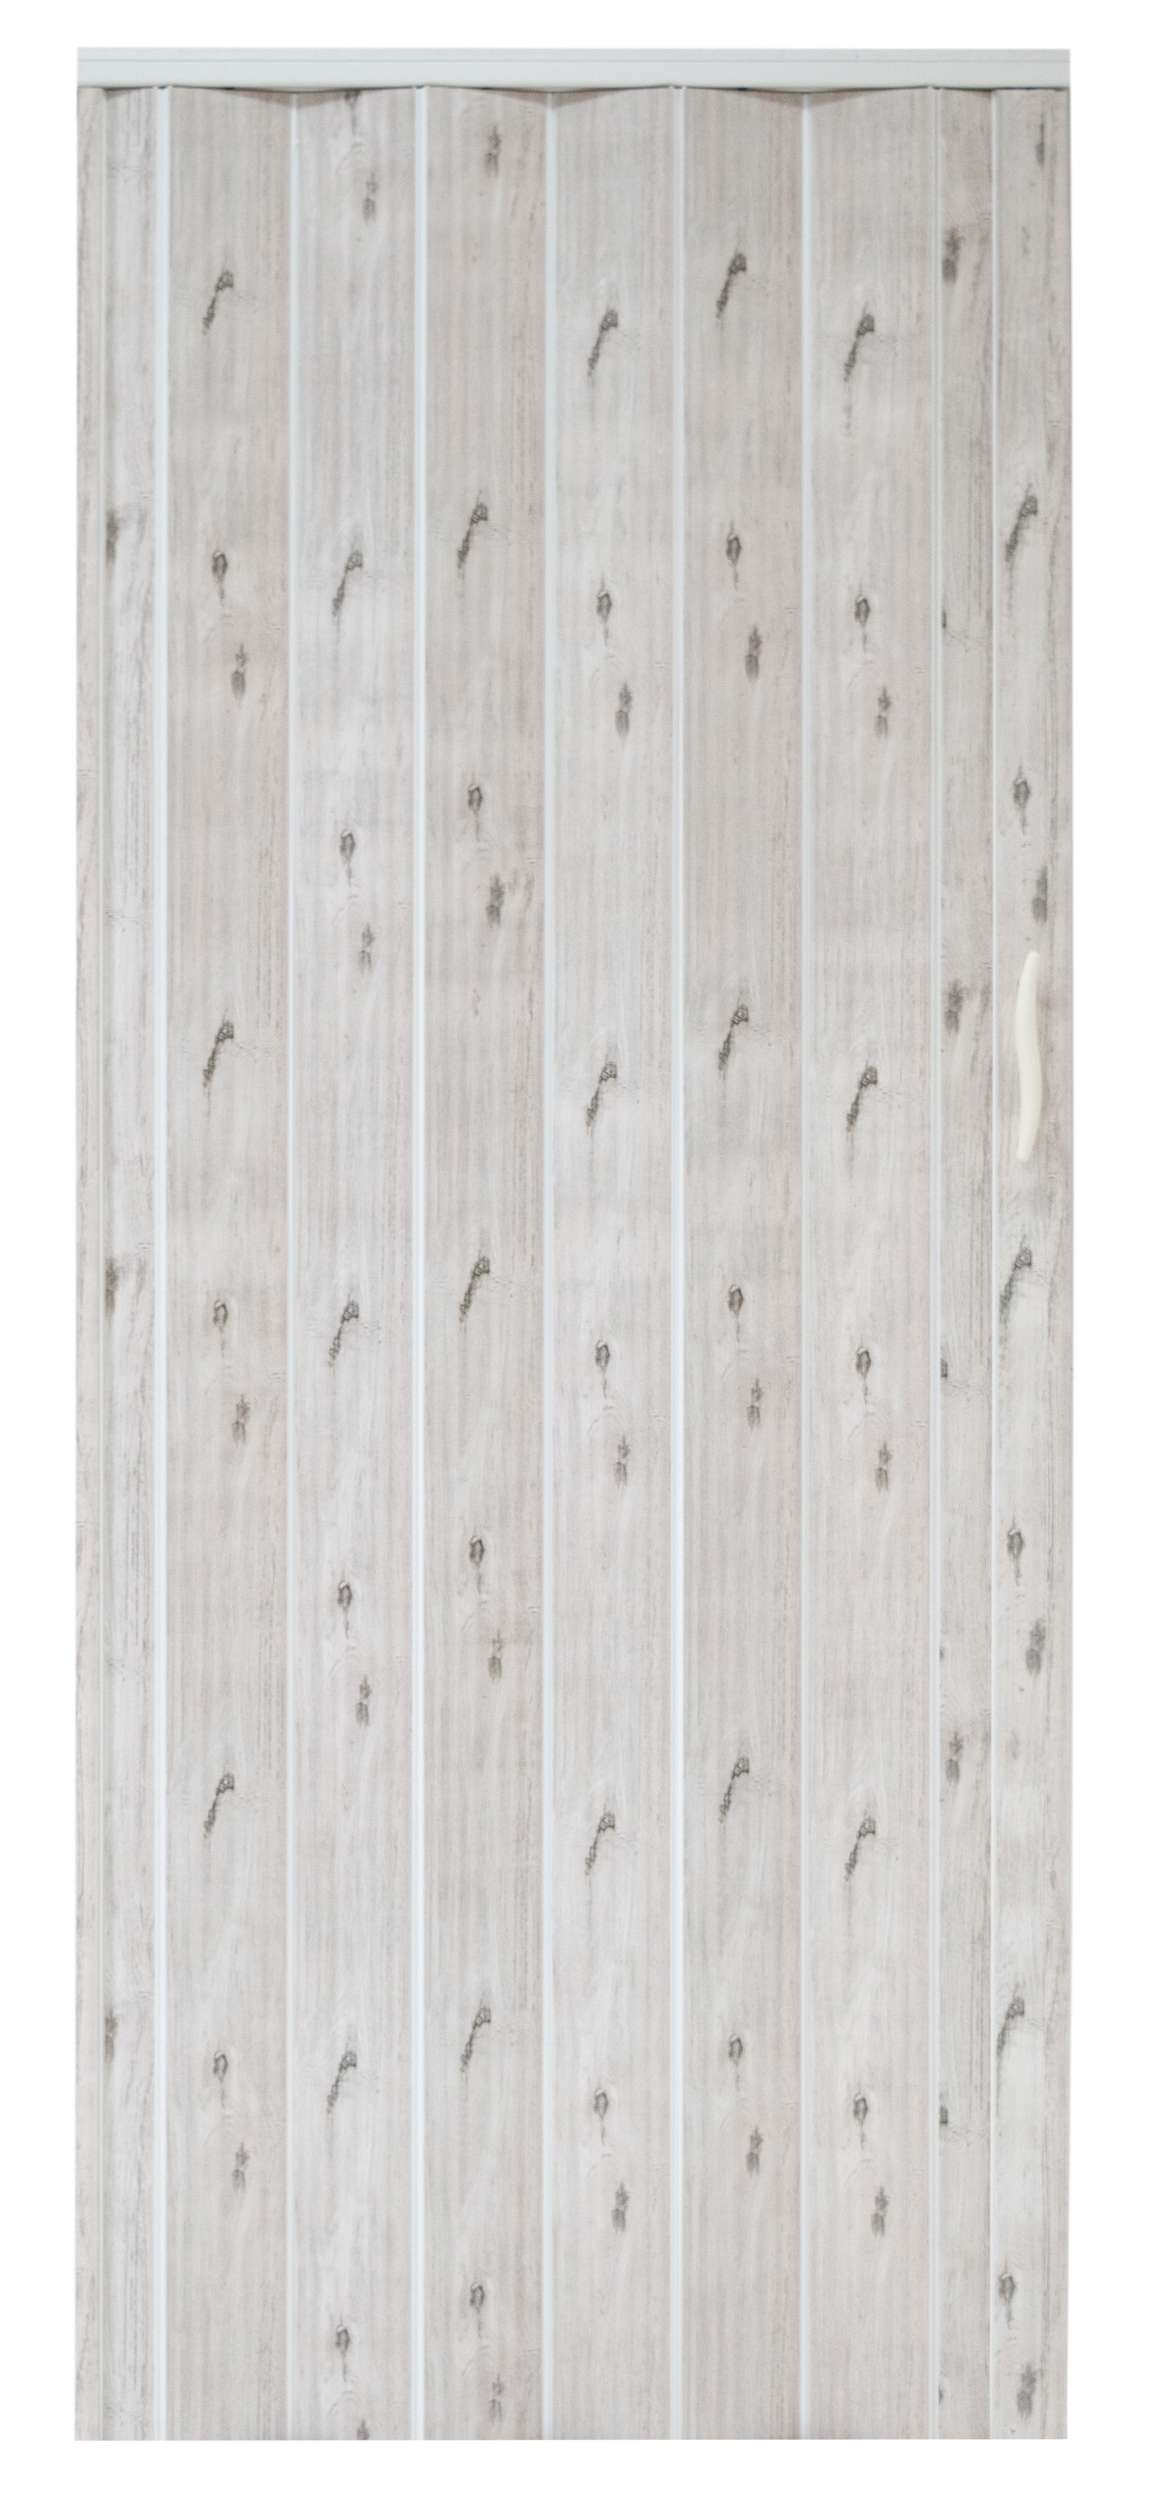  Drzwi harmonijkowe 001P-61 beton mat